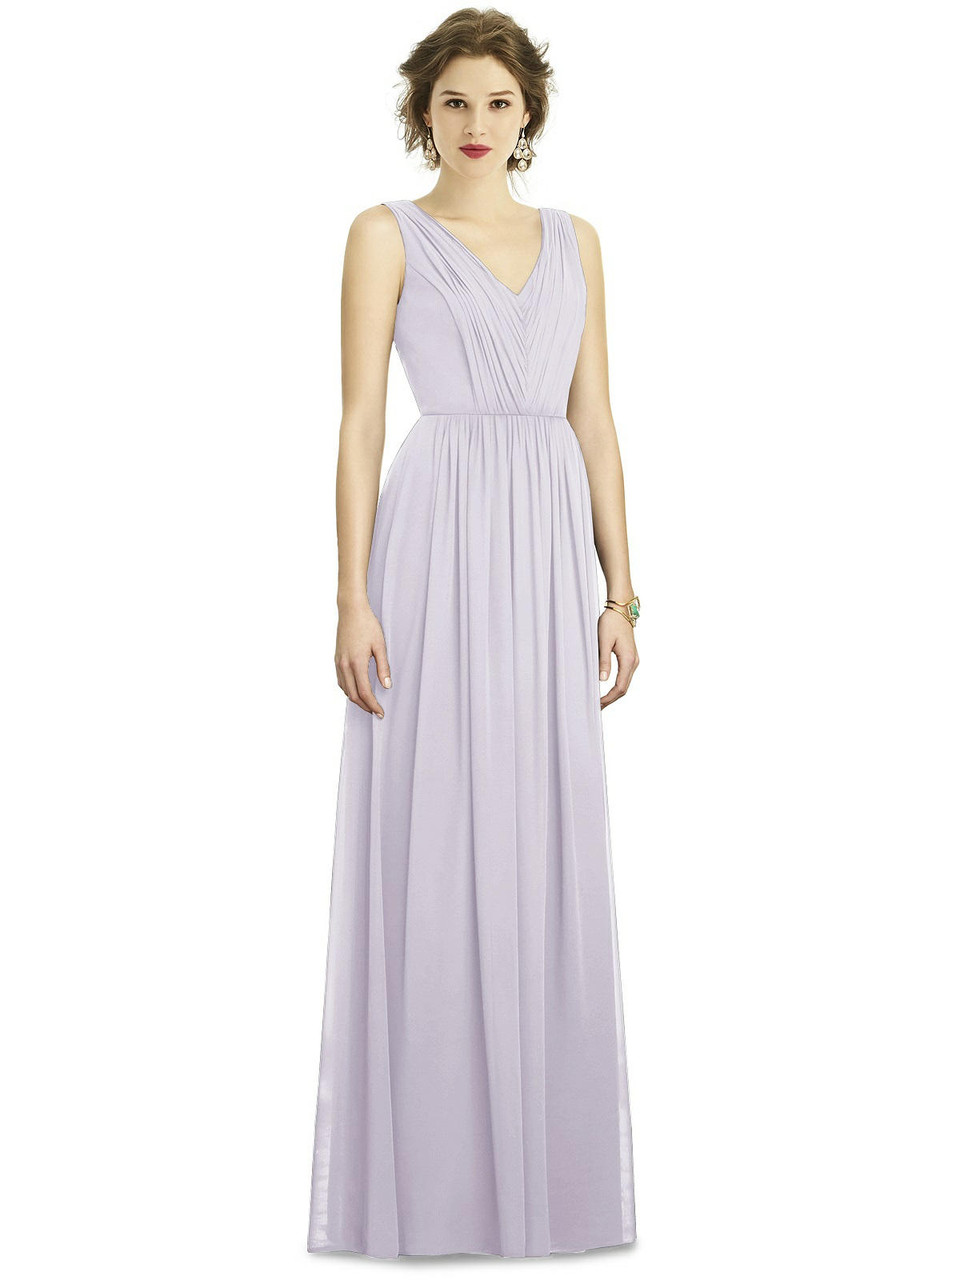 Dessy Bridesmaid Dress 3005 - Lux Chiffon